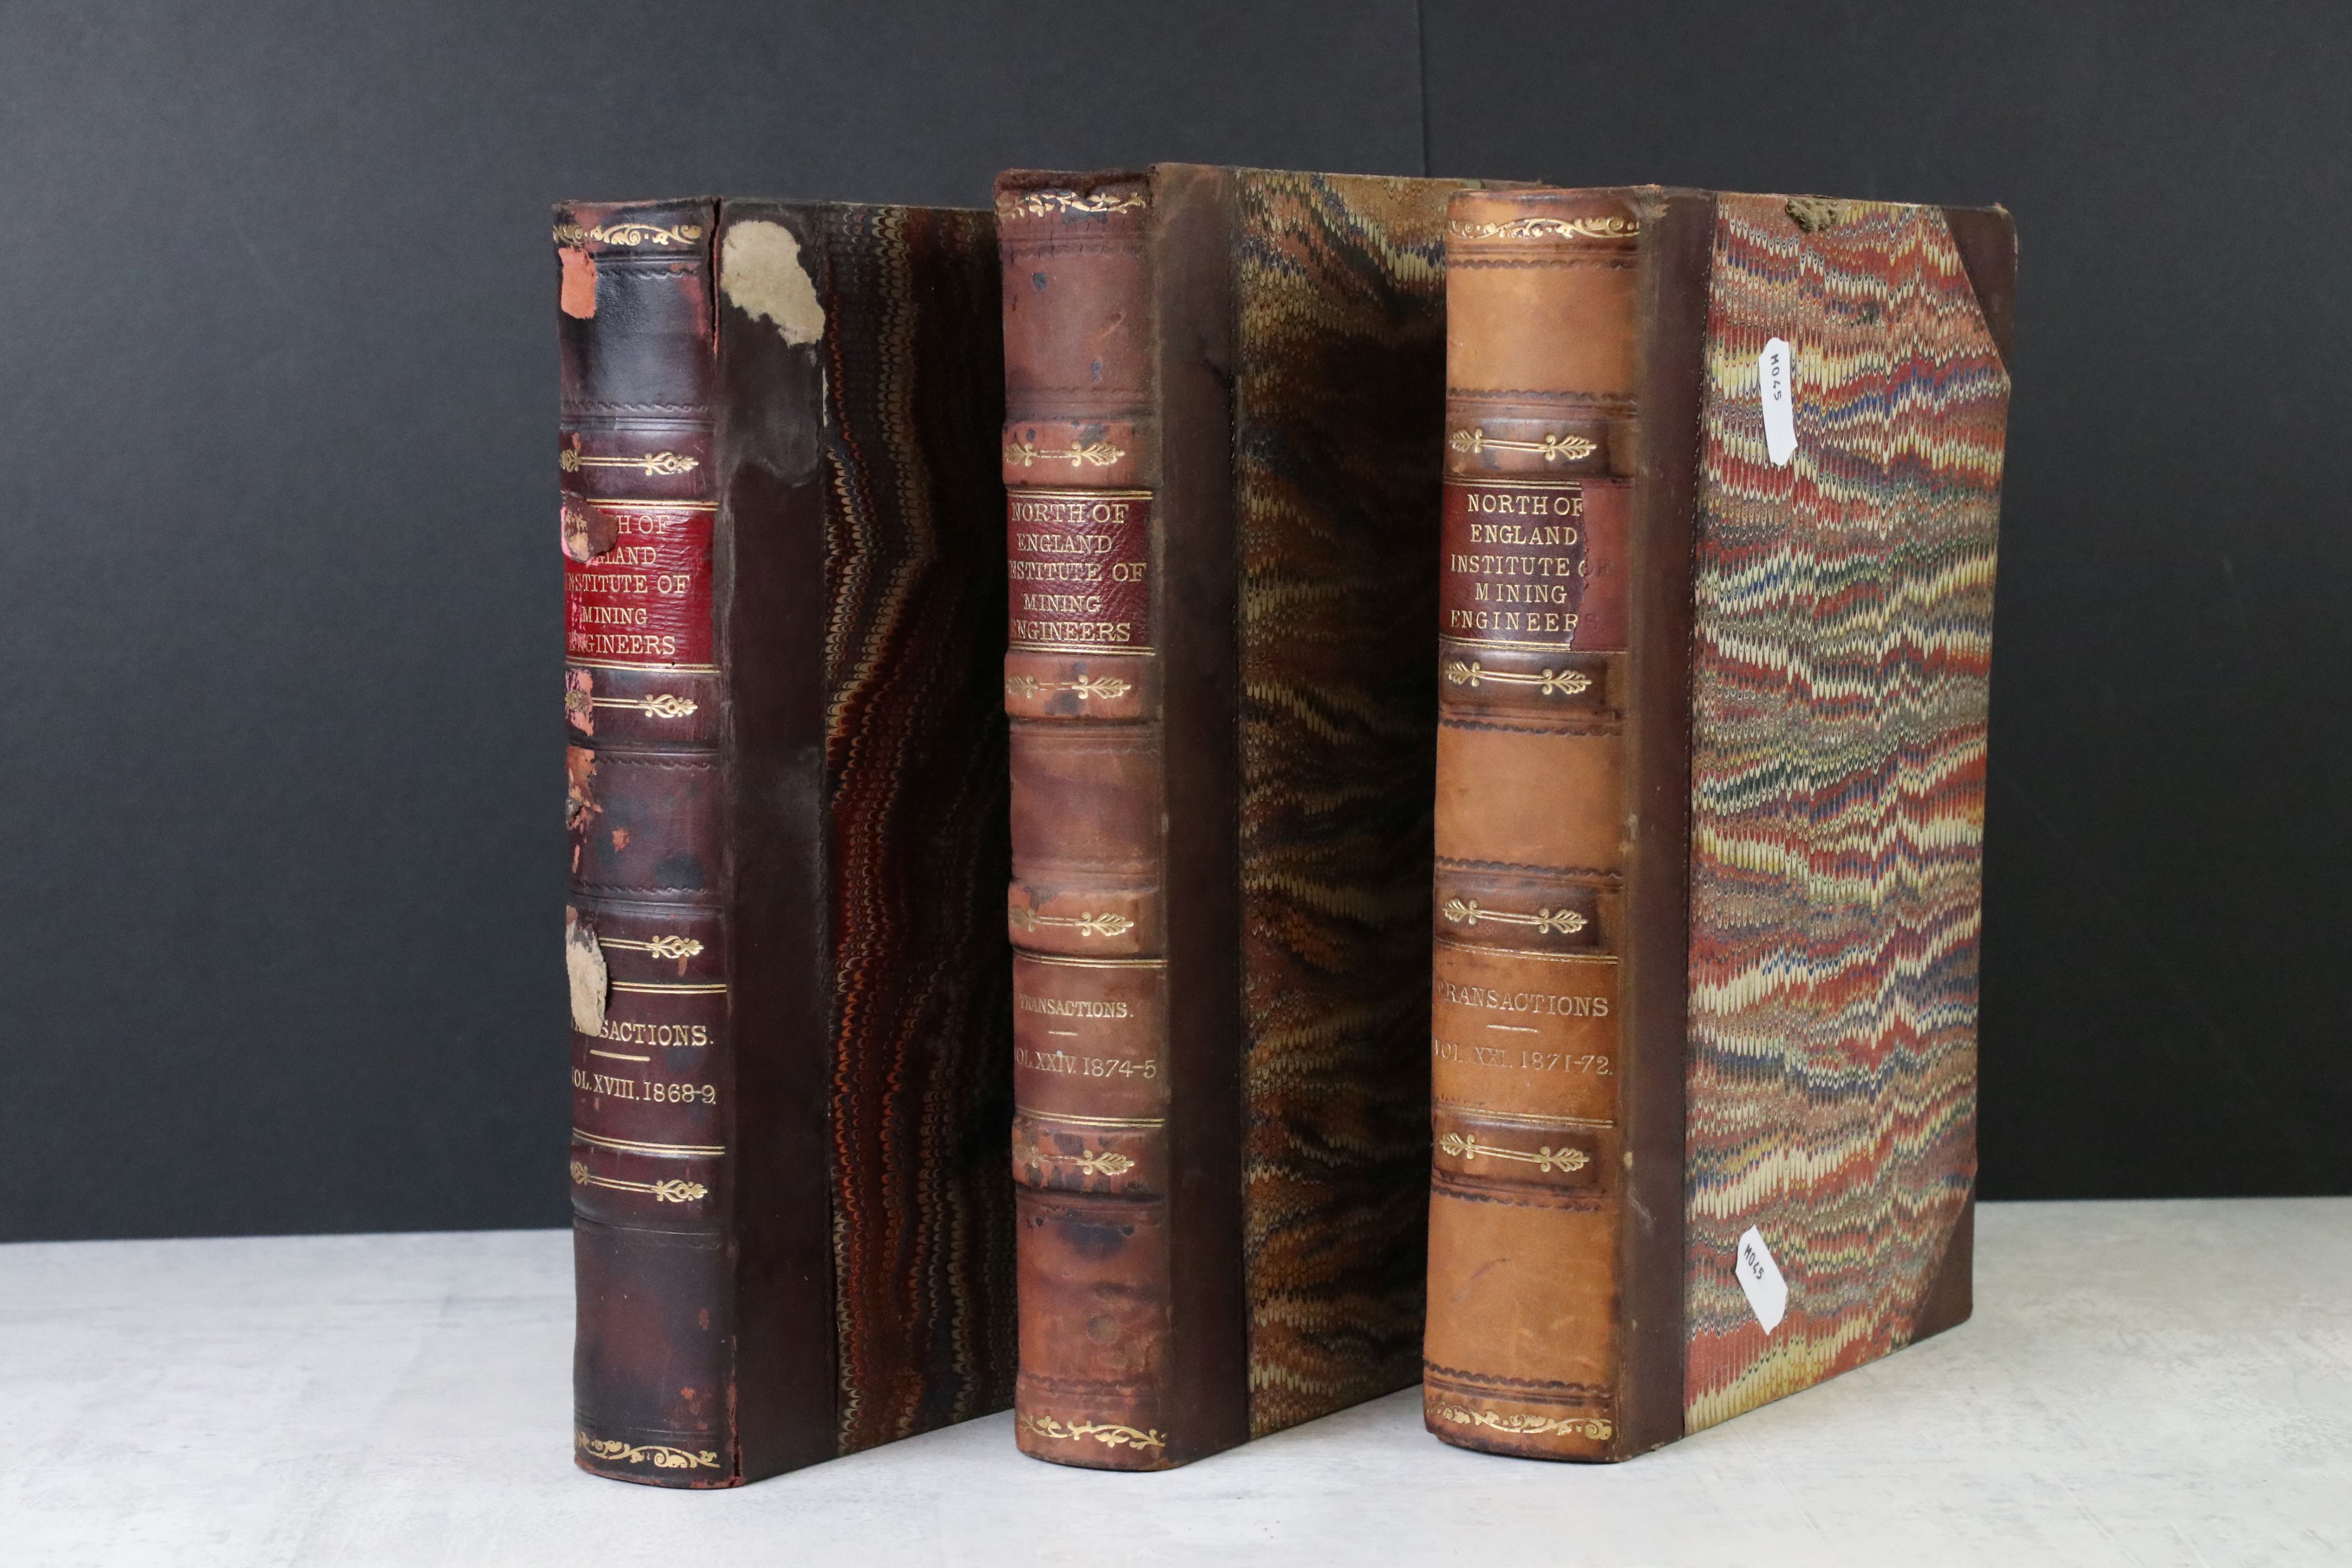 North Of England Institute Of Mining Engineers, three bound volumes of Transactions, vols. XVIII,